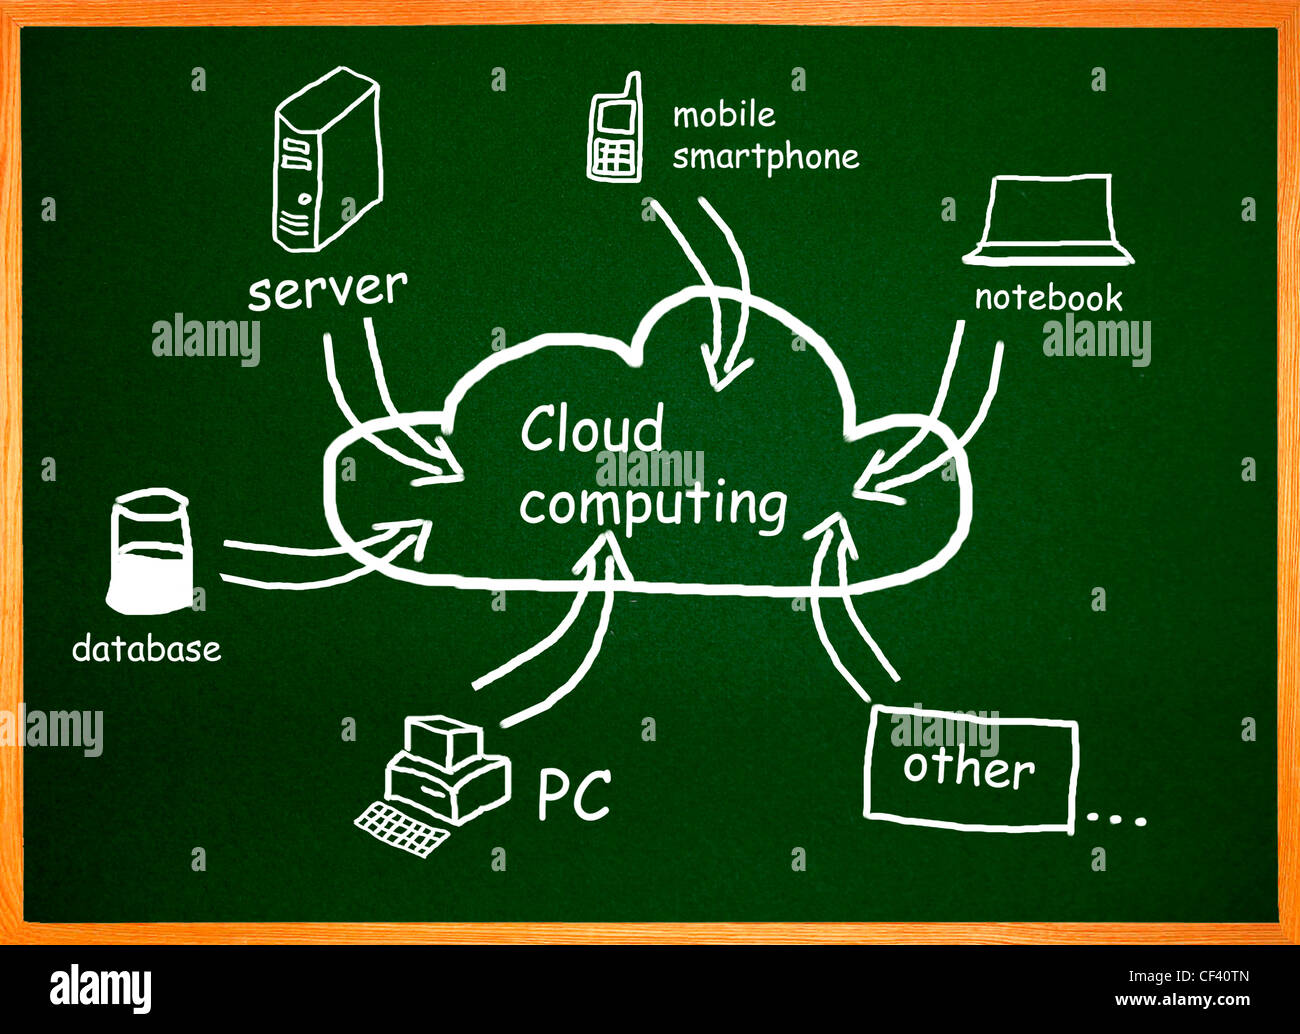 Cloud computing, diagram on a chalkboard Stock Photo